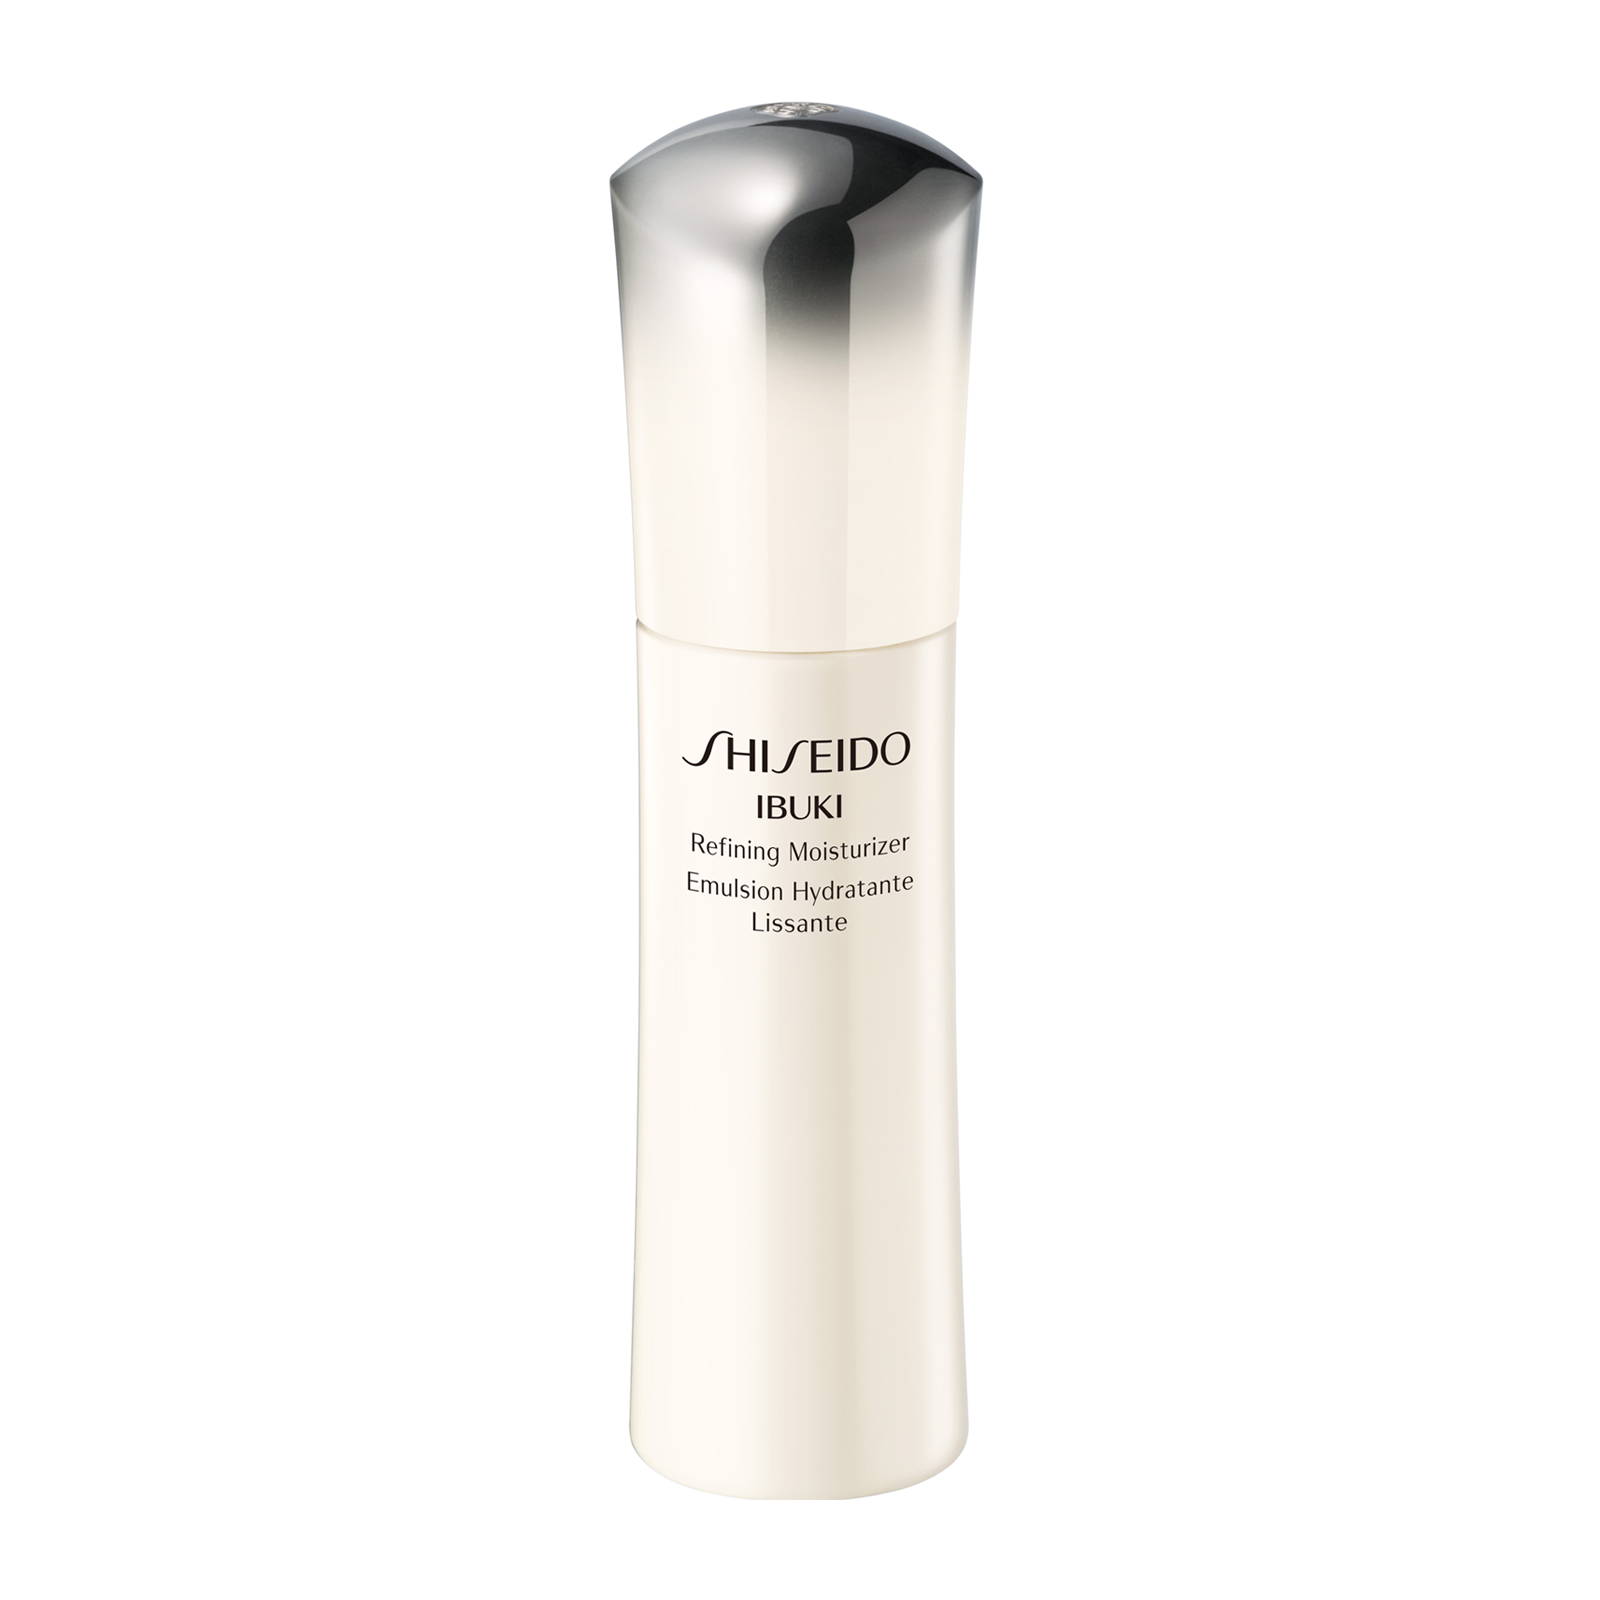 Shiseido Ibuki 2014 Allure Magazine Best of Beauty and Beauty Breakthrough Award Winners: Conair, Shiseido Skincare, Laura Mercier Makeup Products - GIVEAWAY 